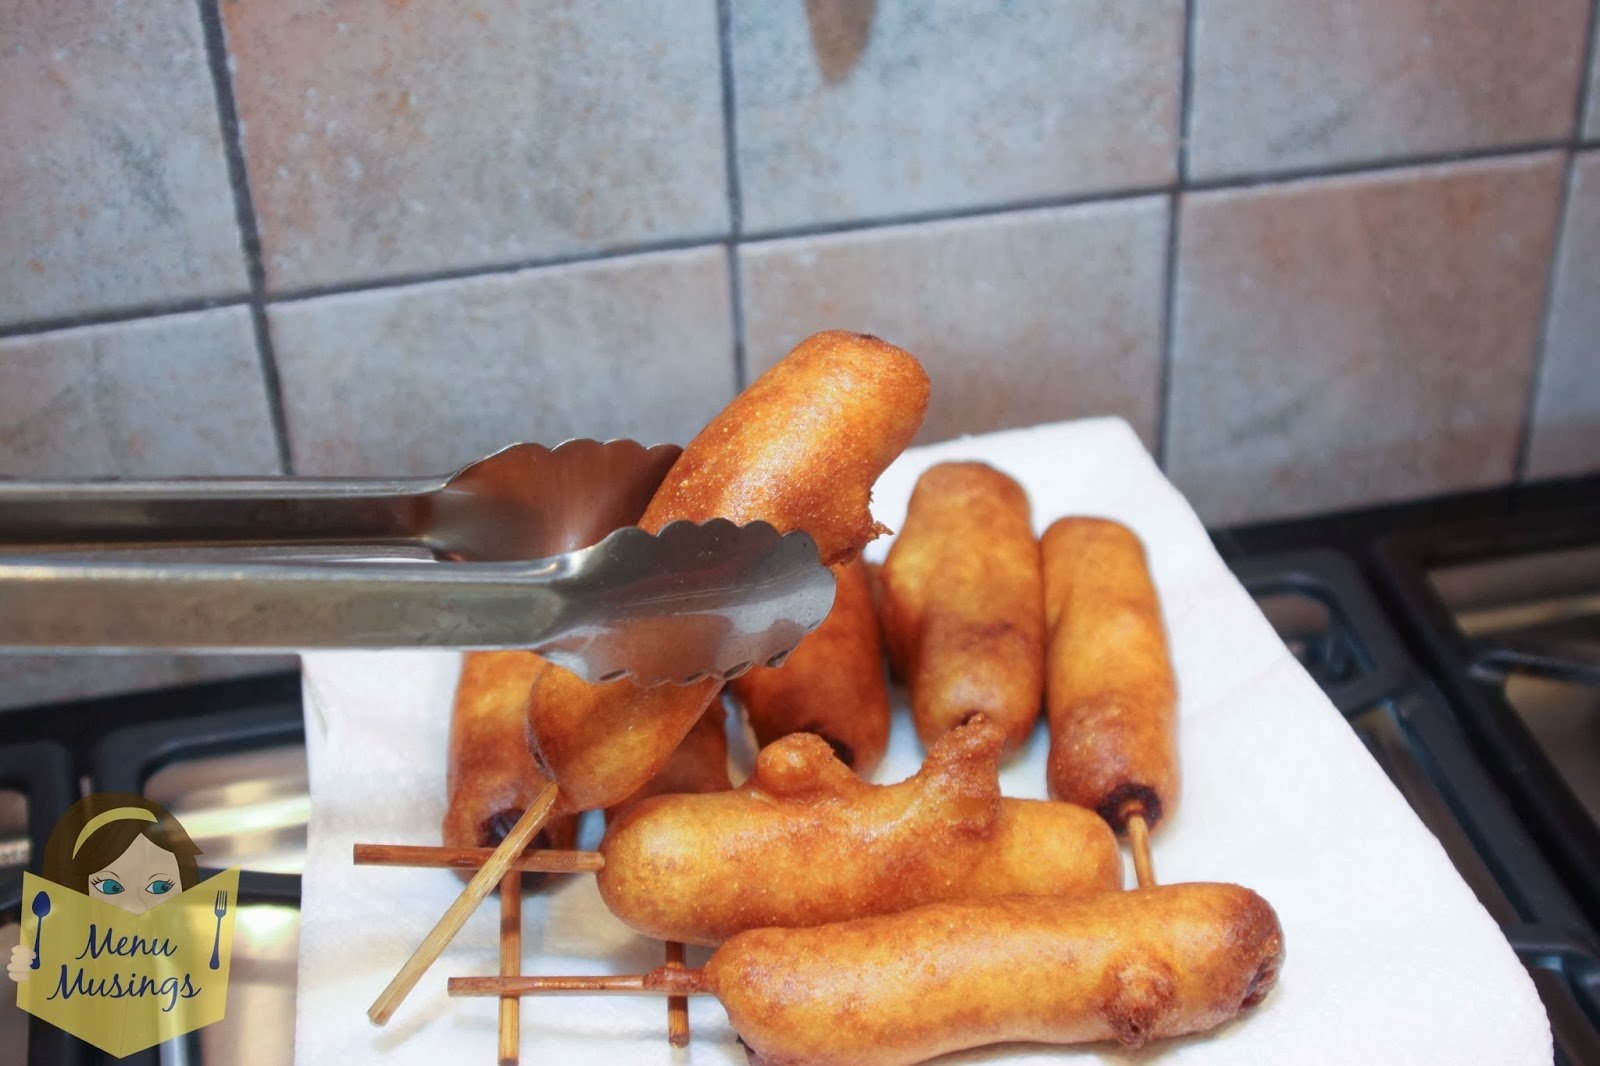 Сосиски в кляре на палочке на сковороде домашних условиях рецепт с фото пошагово